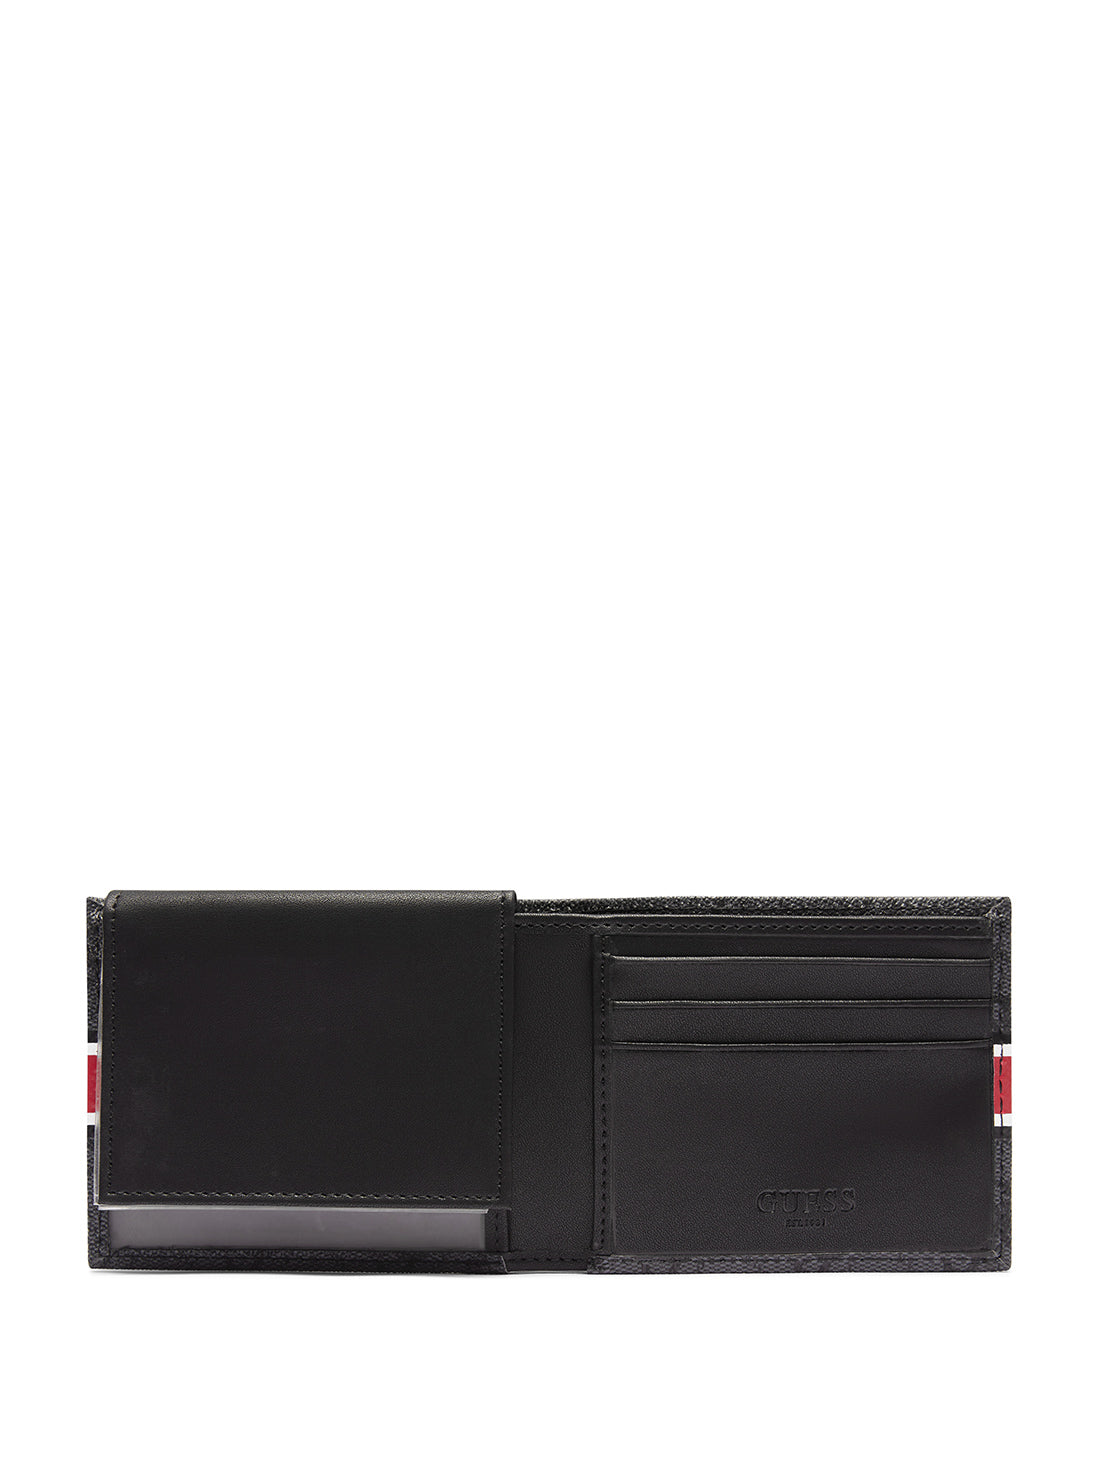 GUESS Black Dinate Slimfold Wallet